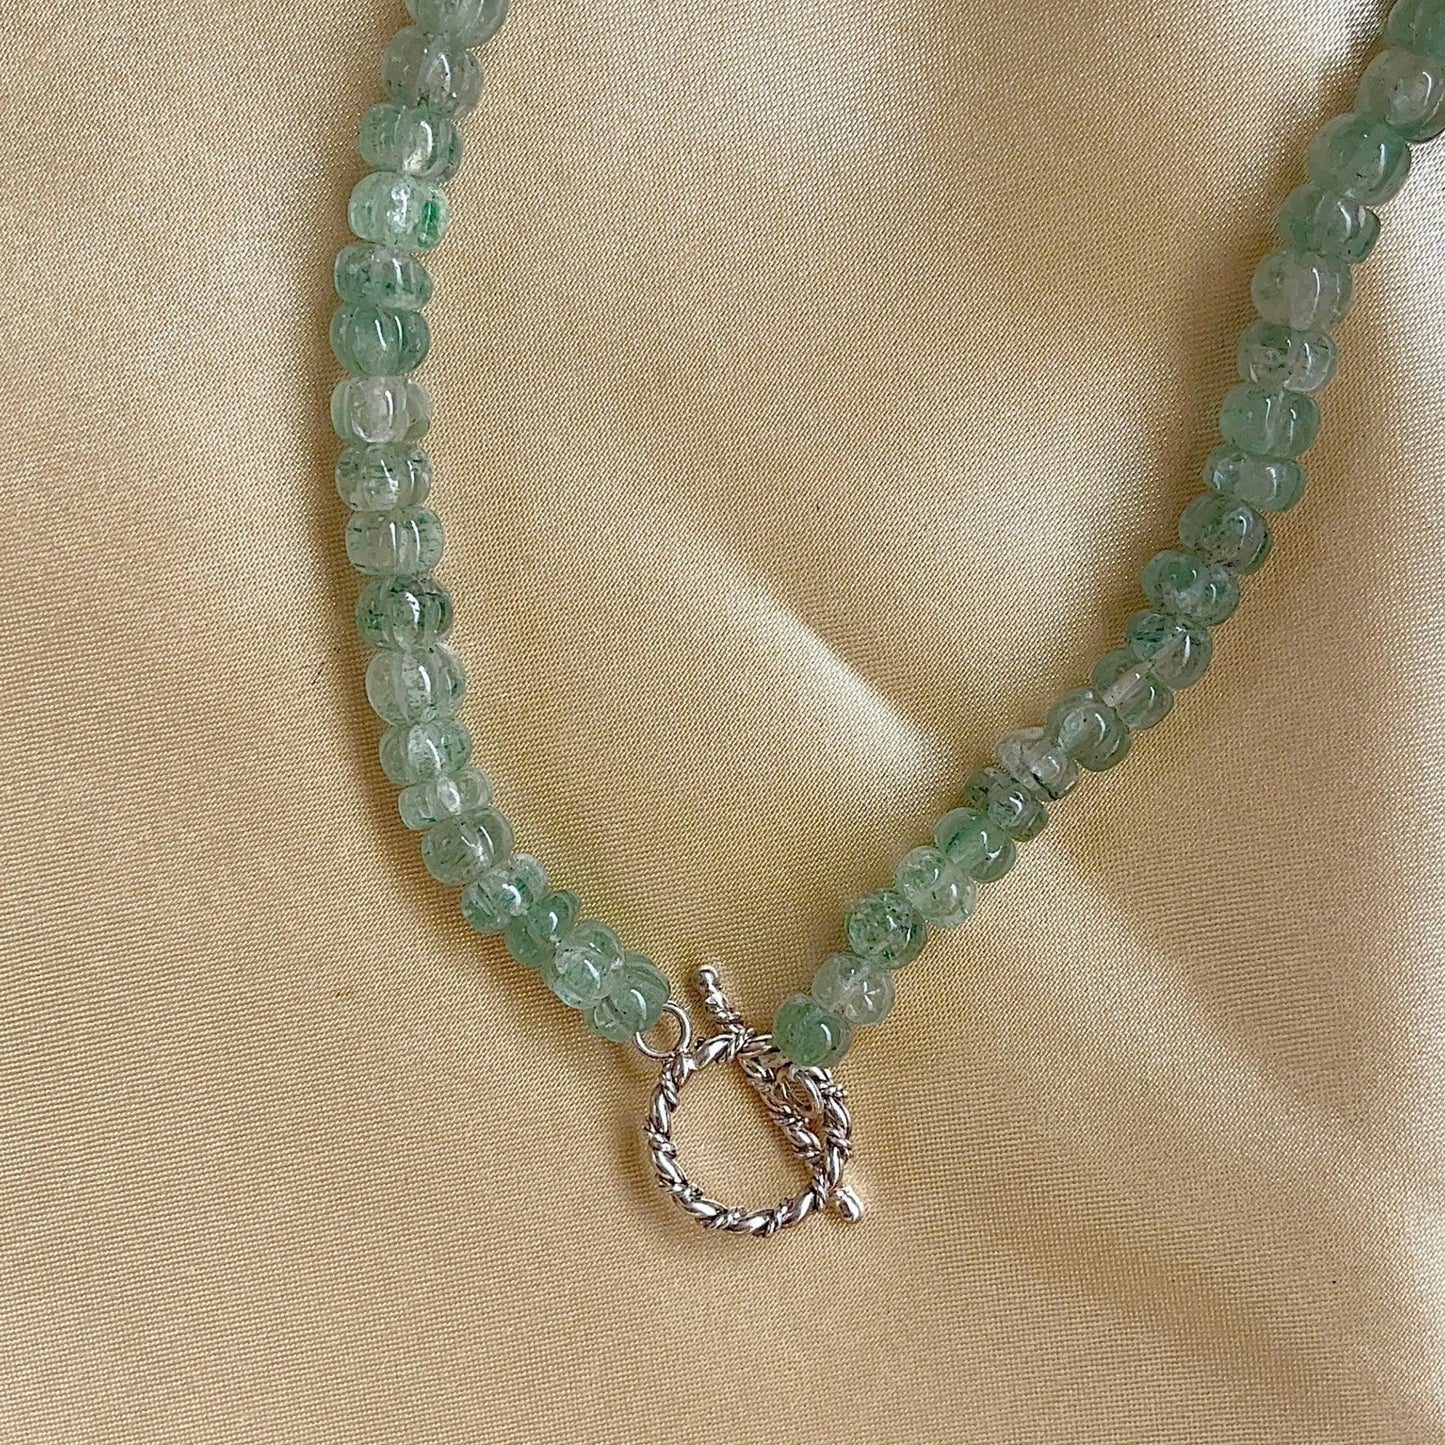 NAtural gemstone necklace